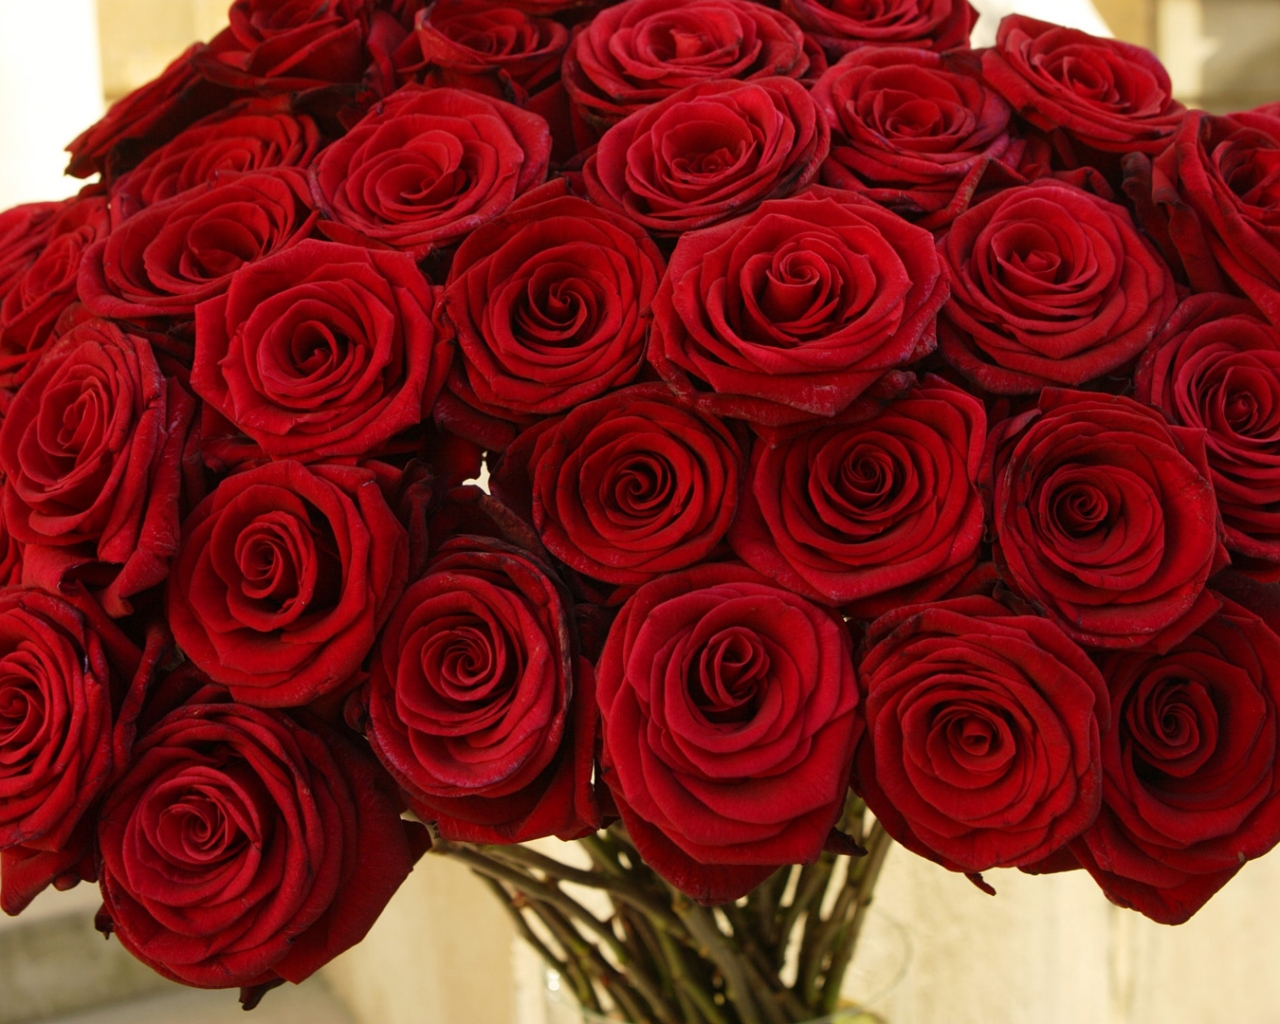 Valentines Day Red Rose Bouquet HD Desktop Wallpaper Background